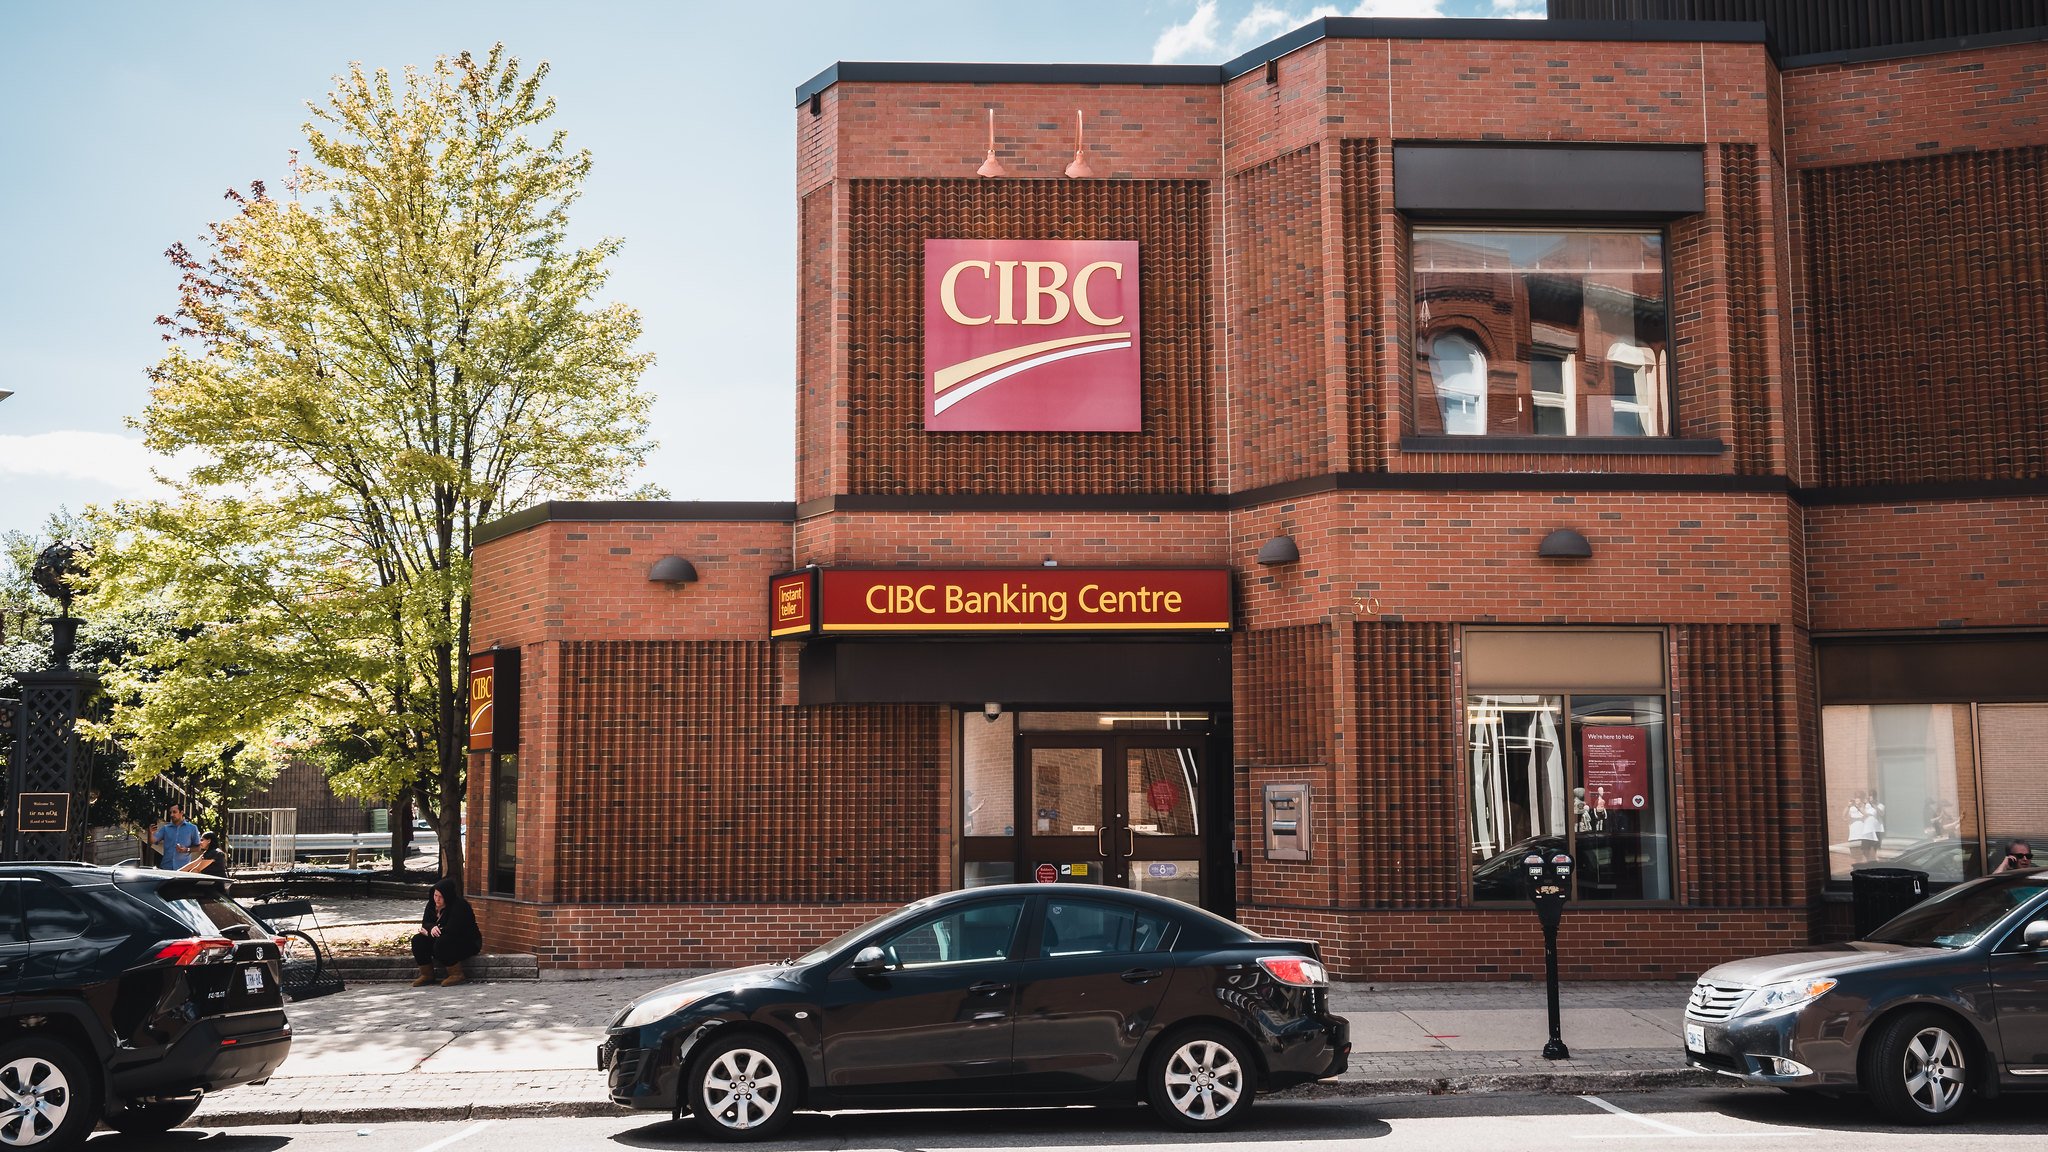 CIBC Banking Centre by PiggyBank